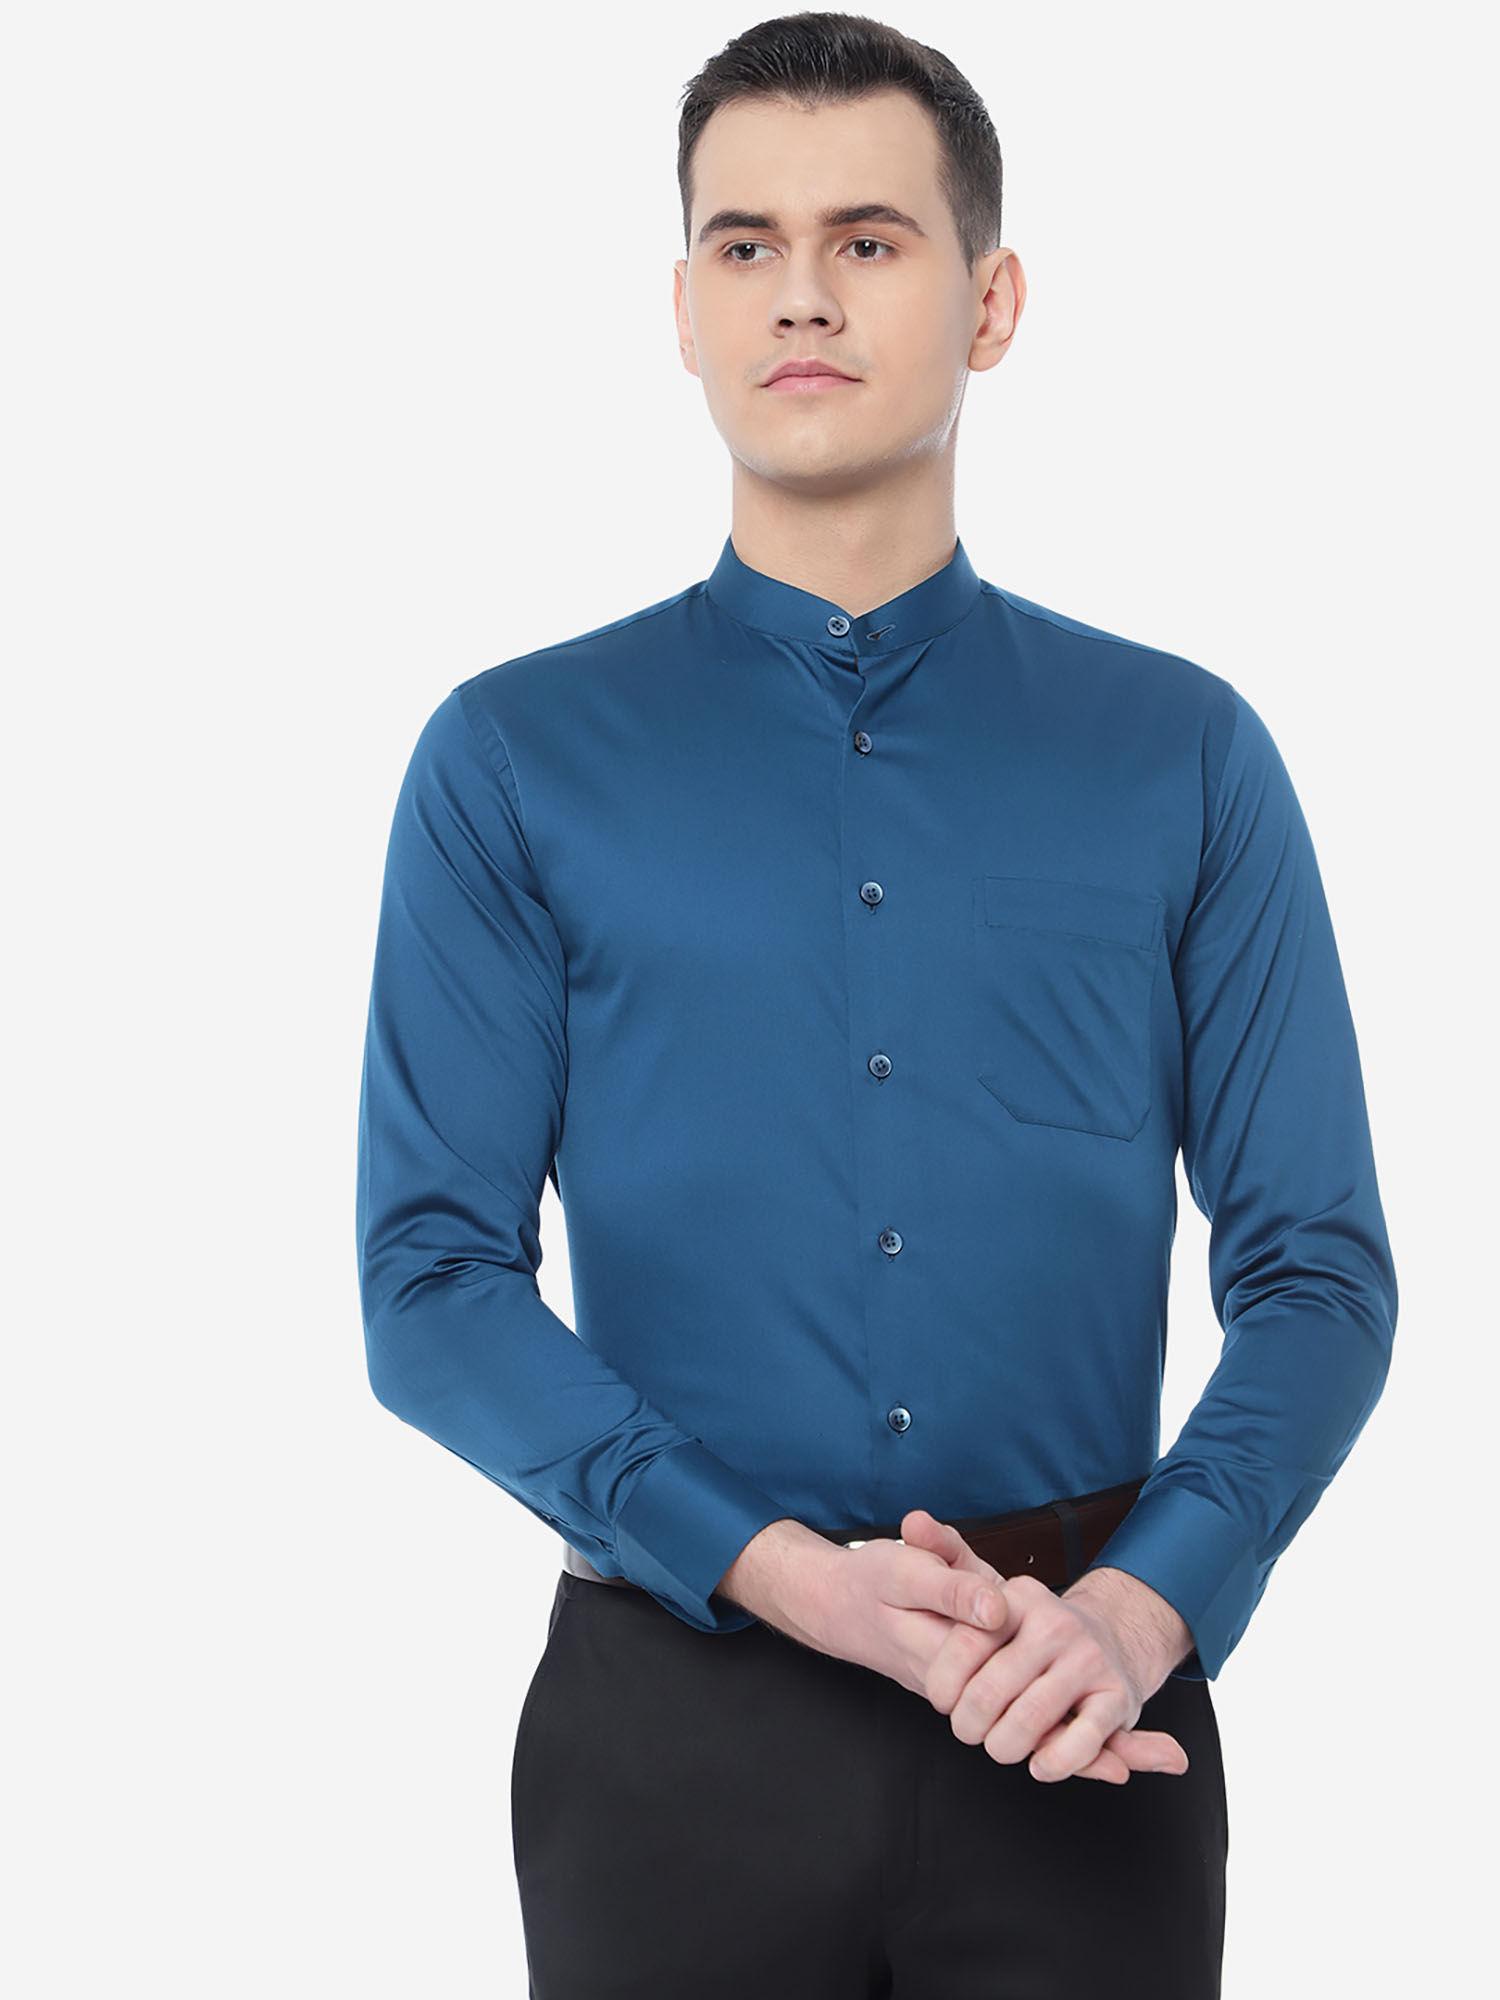 men-solid-peacock-blue-cotton-slim-fit-formal-shirt